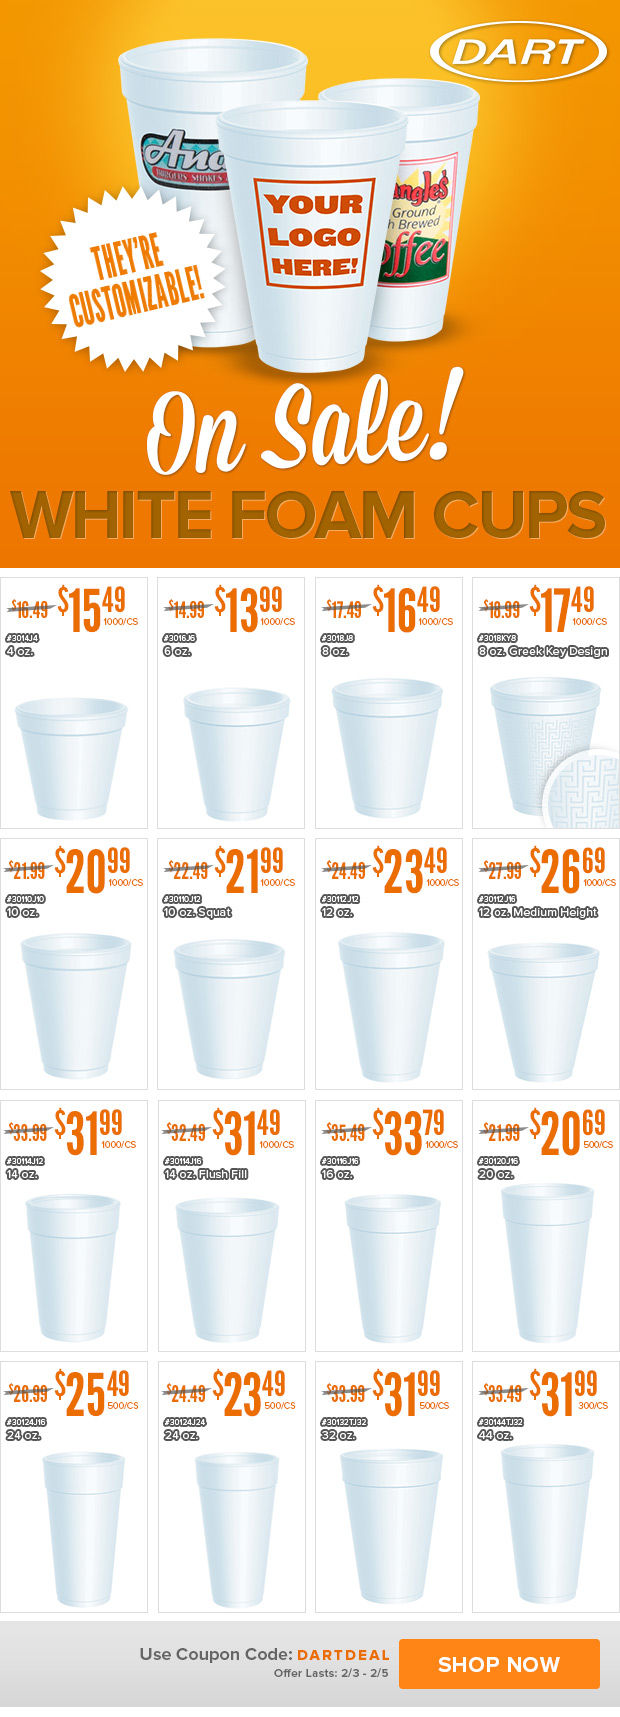 Dart Customizable White Foam Cups On Sale!